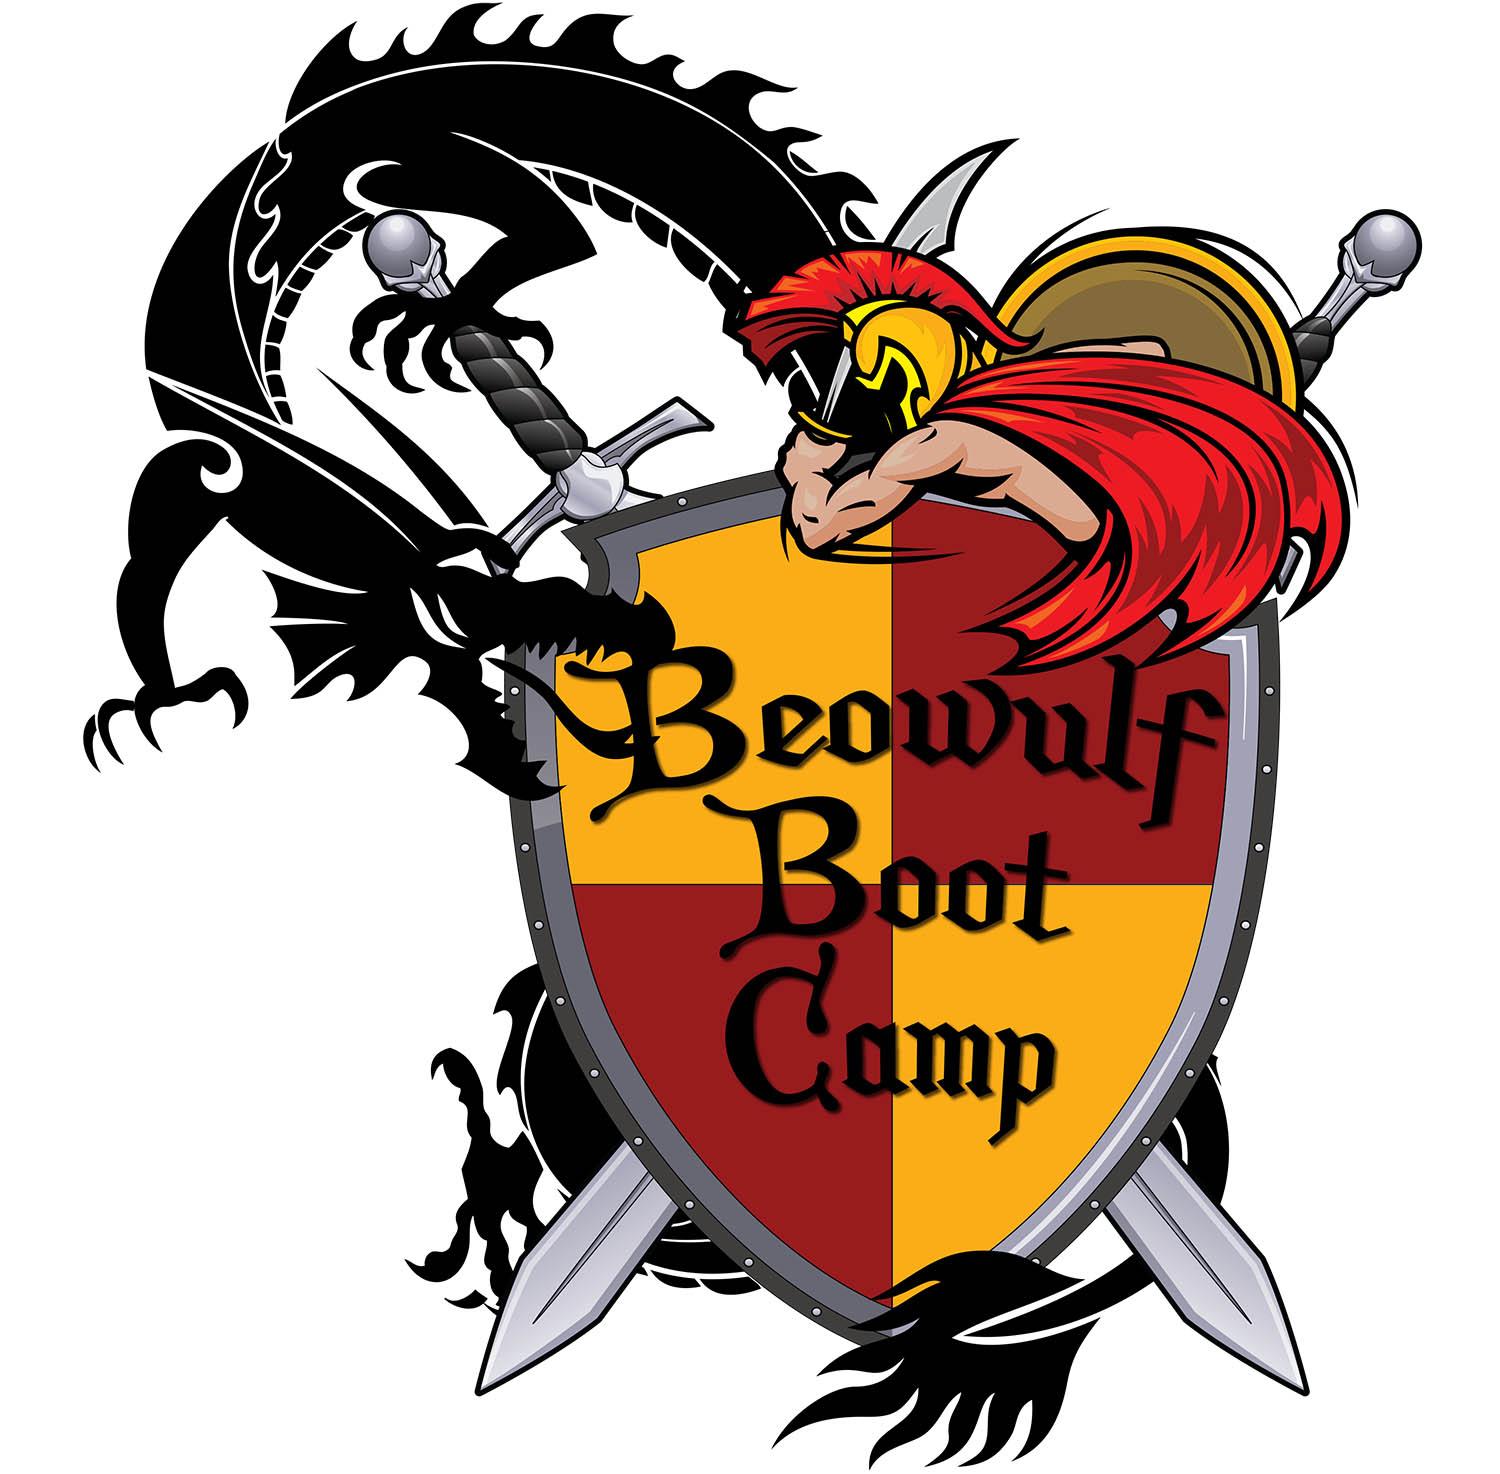 LSU Beowulf Boot Camp 2020